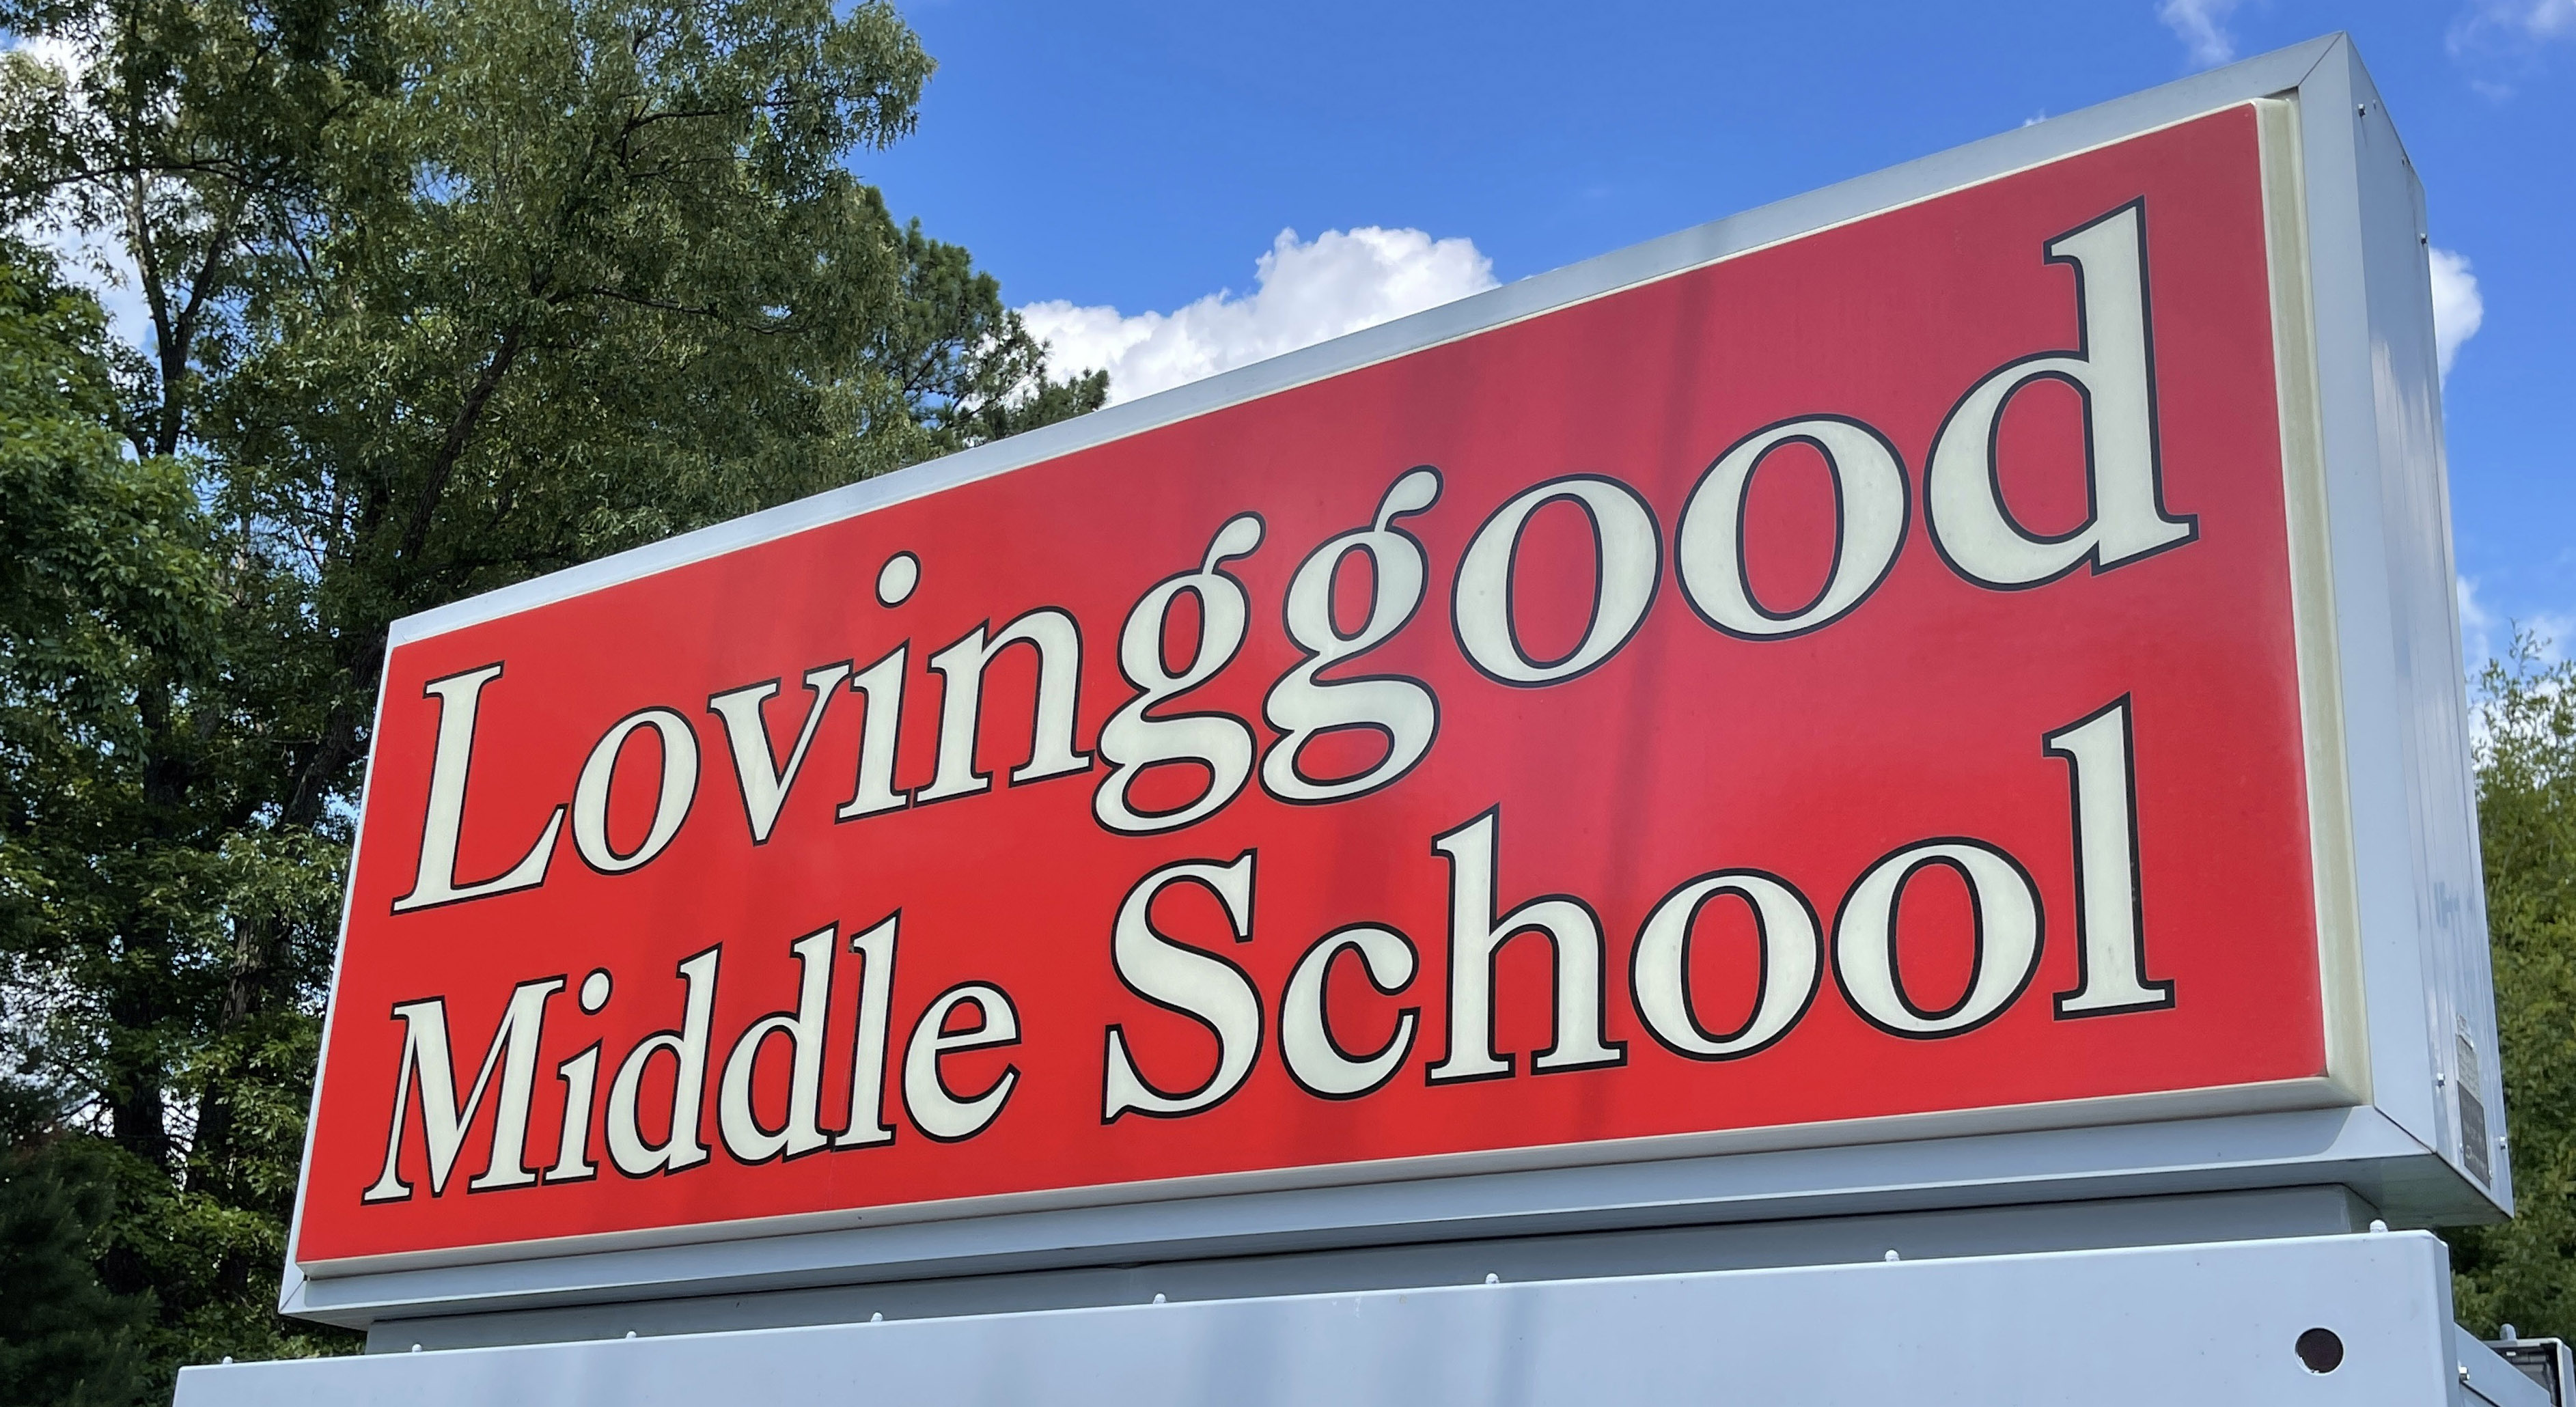 Lovinggood Middle School